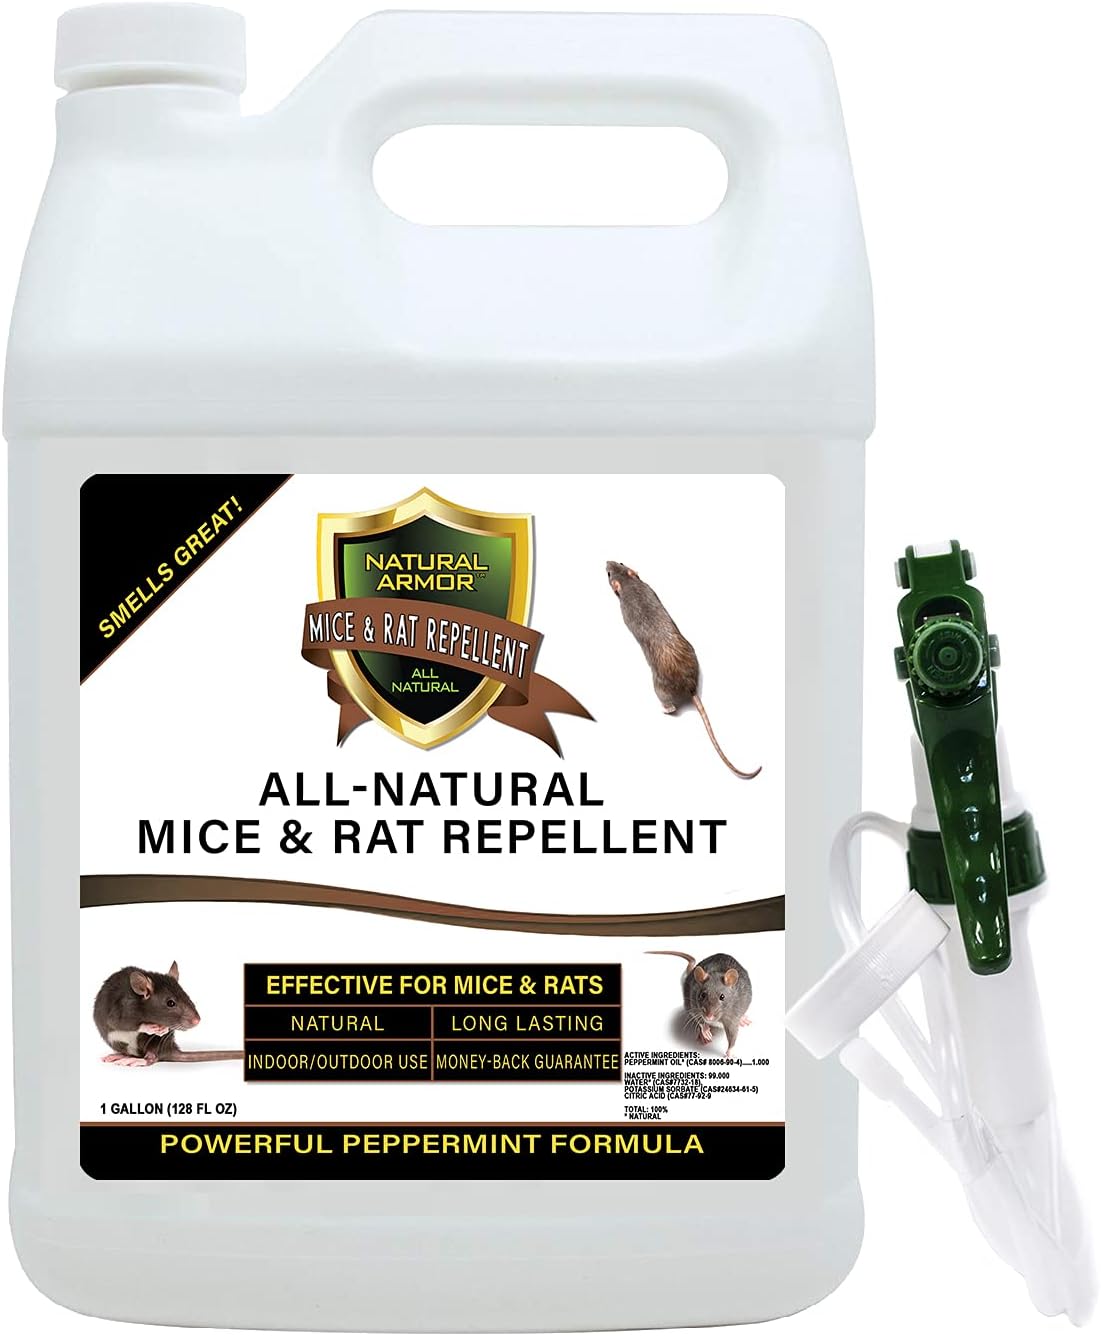 Mice & Rat Repellent. Peppermint Repellent for [...]